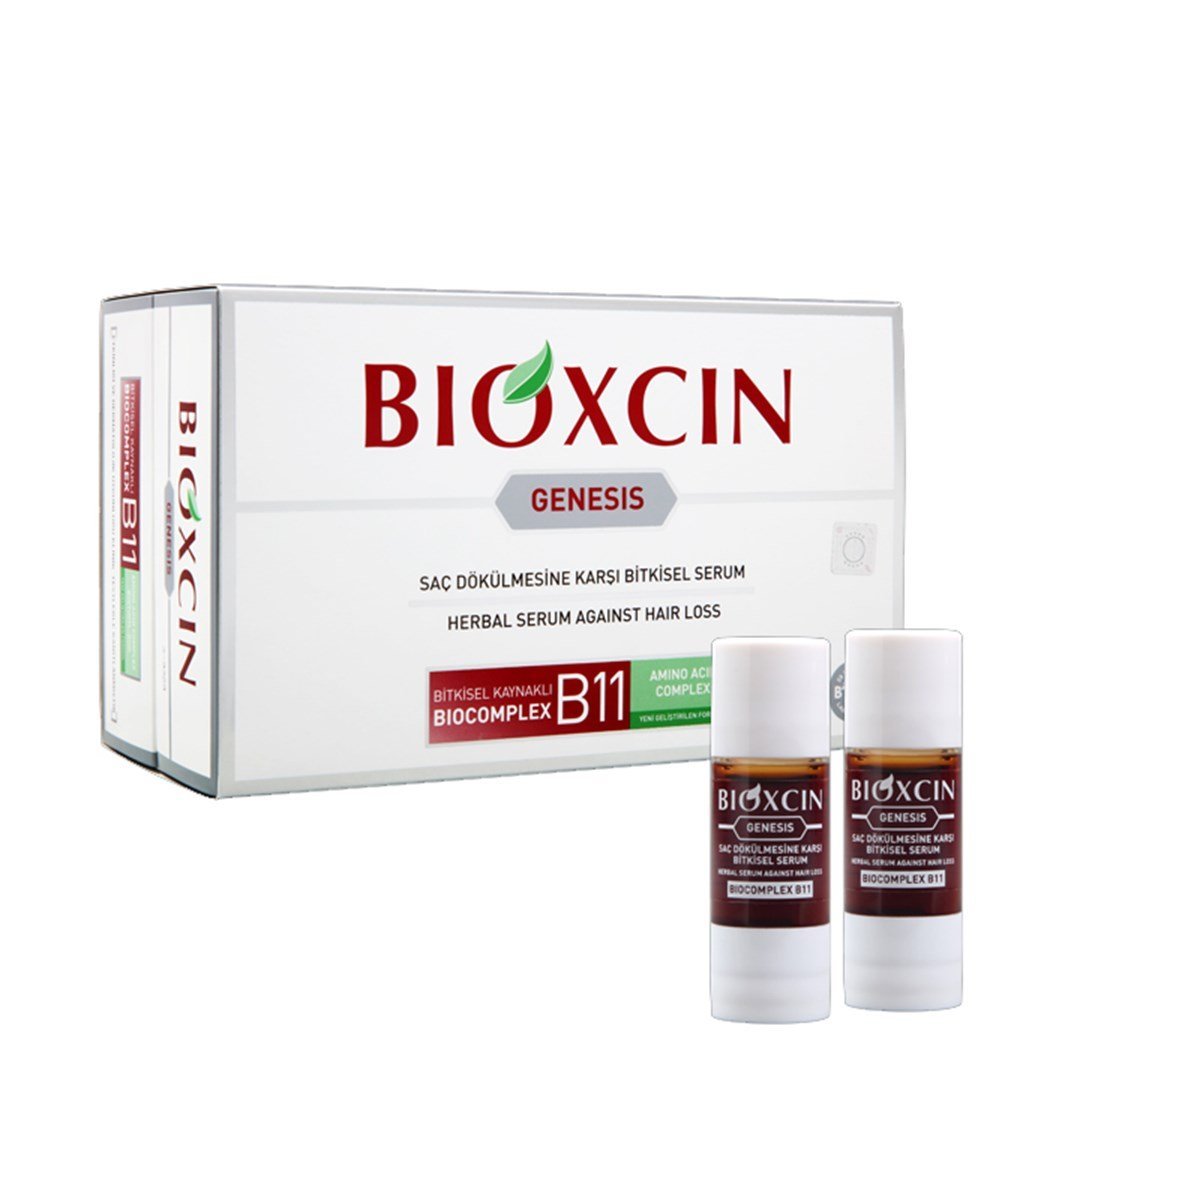 Bioxcin Genesis Saç Dökülmesine Karşı Bitkisel Serum 15*10ml